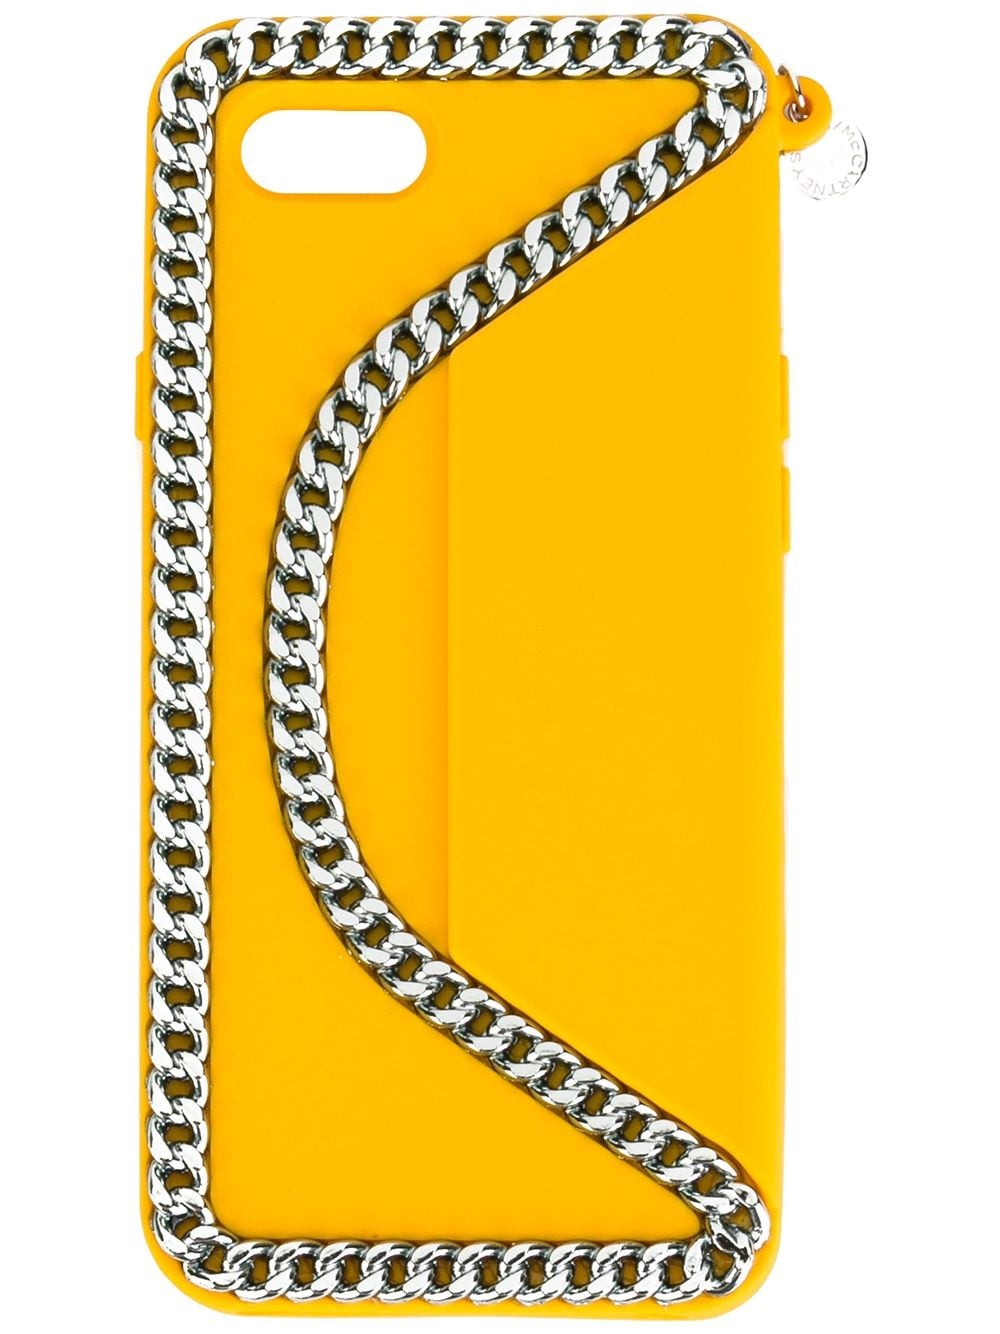 Stella McCartney Falabella iPhone 6s case - Yellow von Stella McCartney